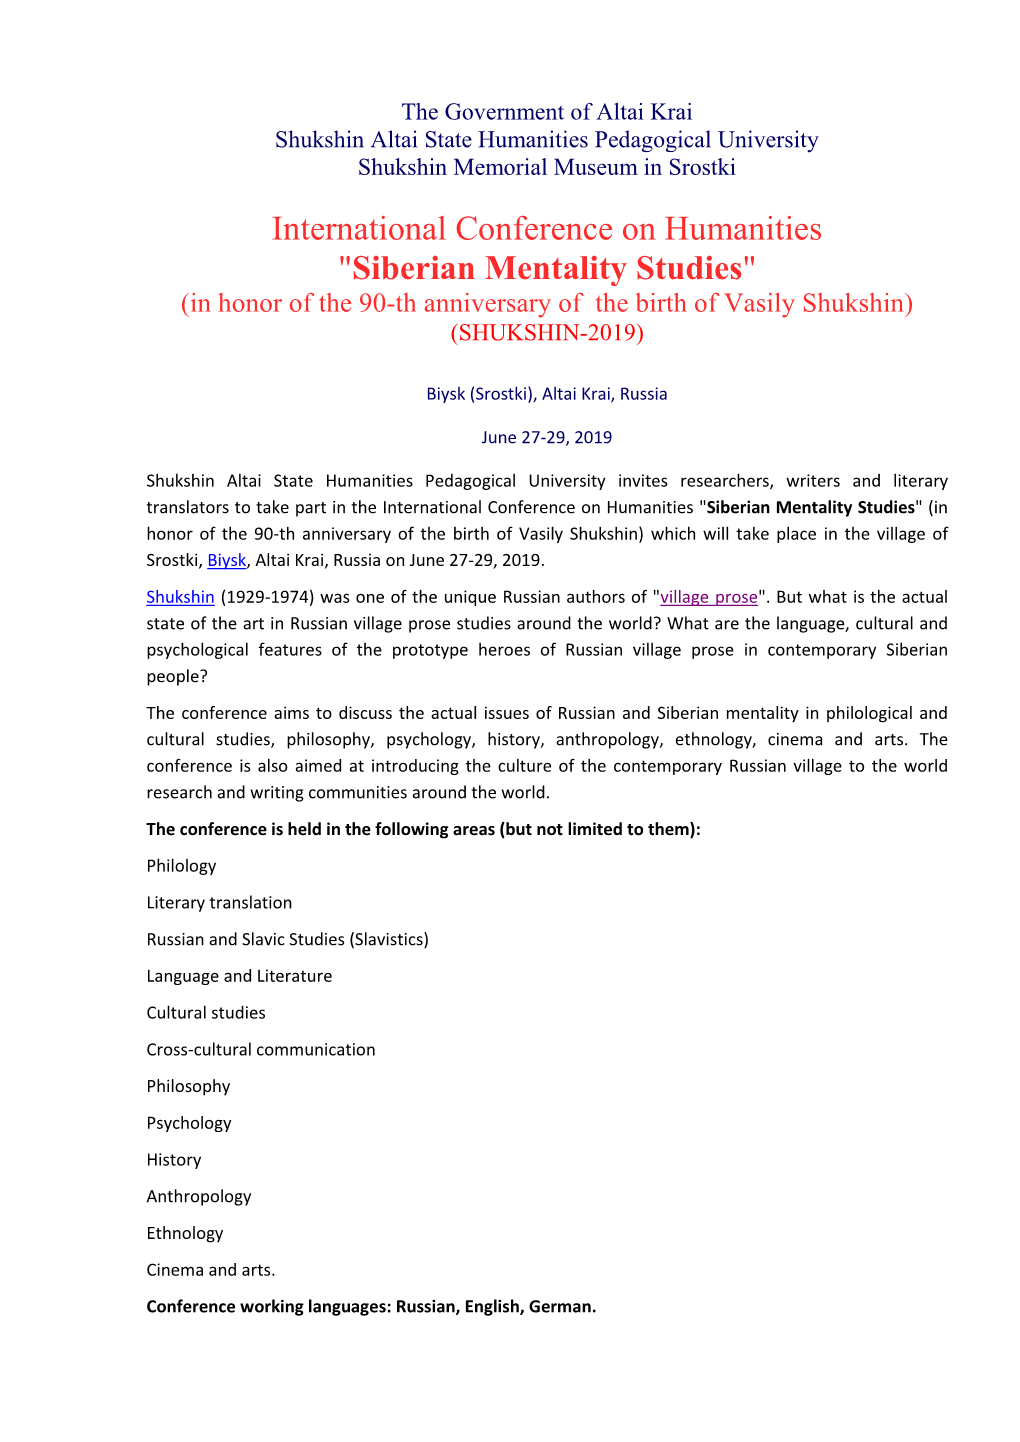 Siberian Mentality Studies" (In Honor of the 90-Th Anniversary of the Birth of Vasily Shukshin) (SHUKSHIN-2019)